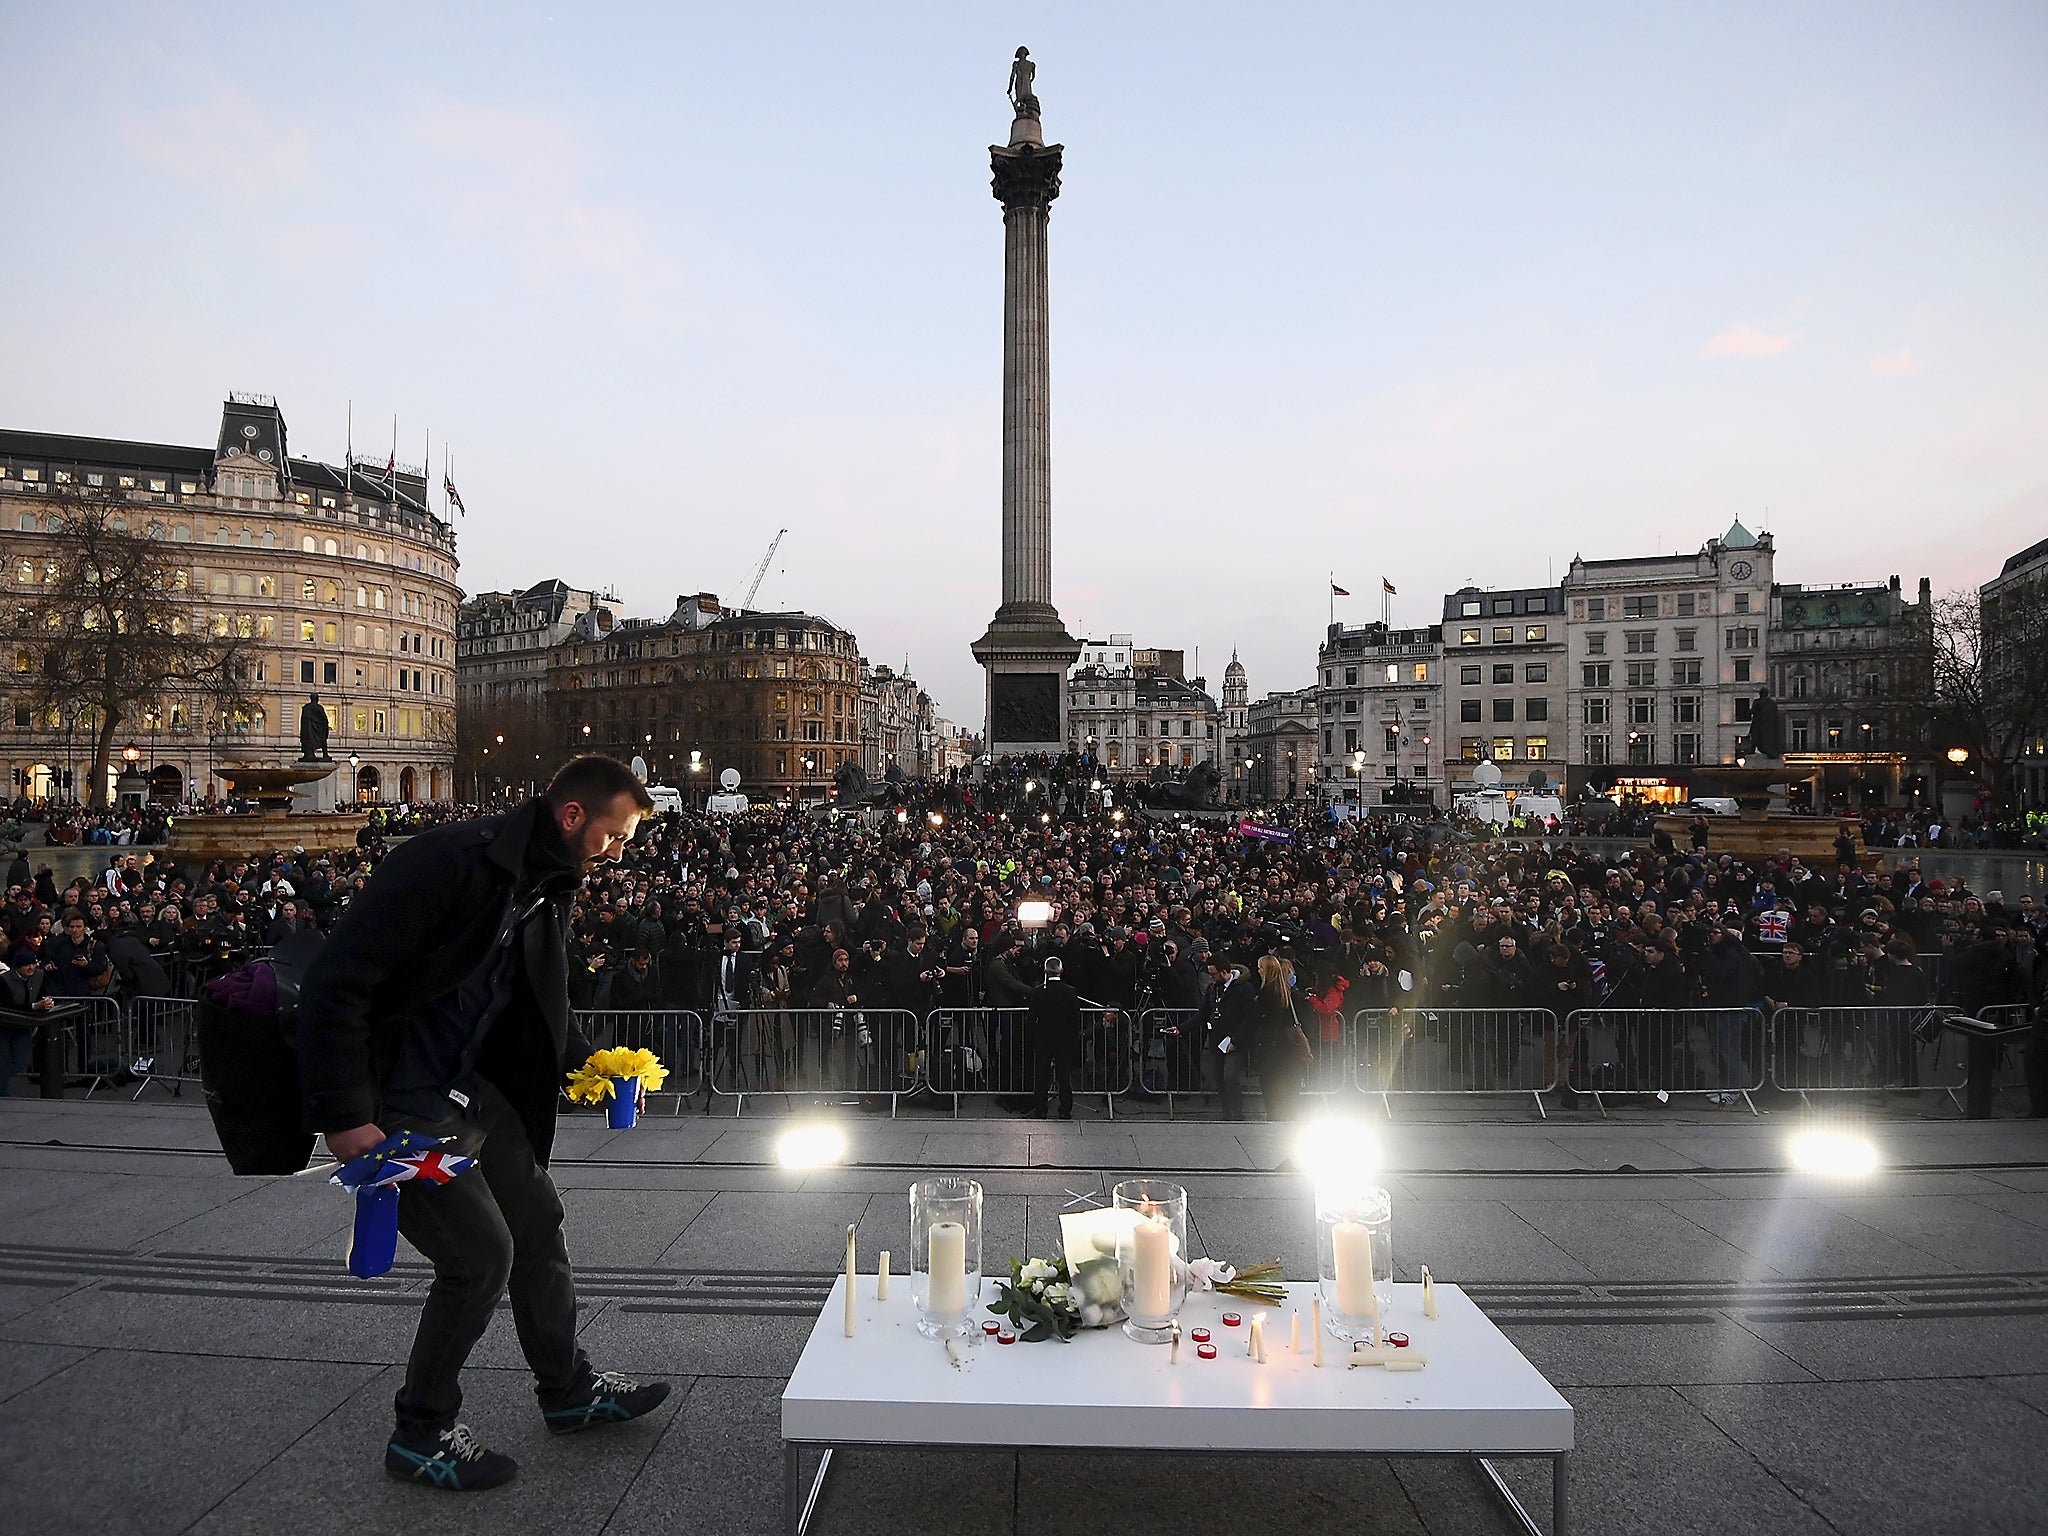 A man lays flowers during a candlelit vigil at Trafalgar Square